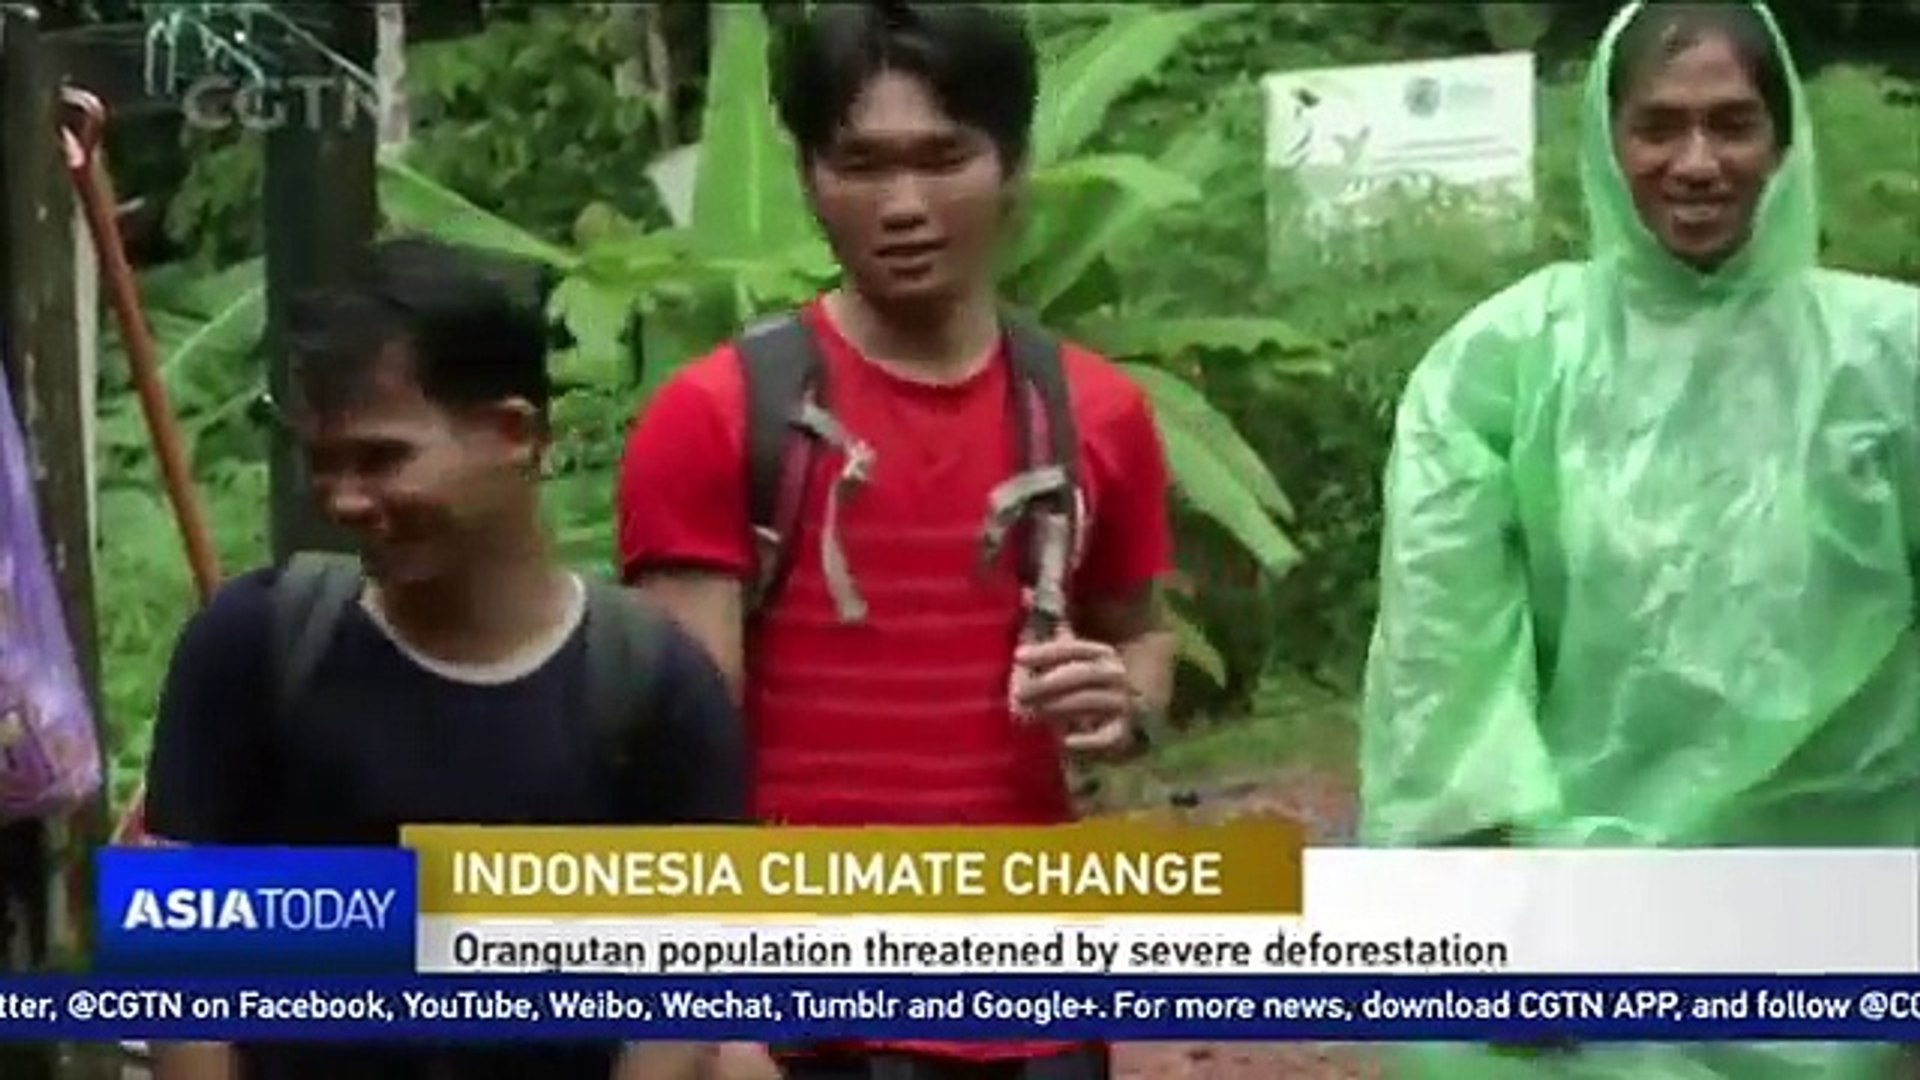 Orangutan in Indonesia threatened by severe deforestation